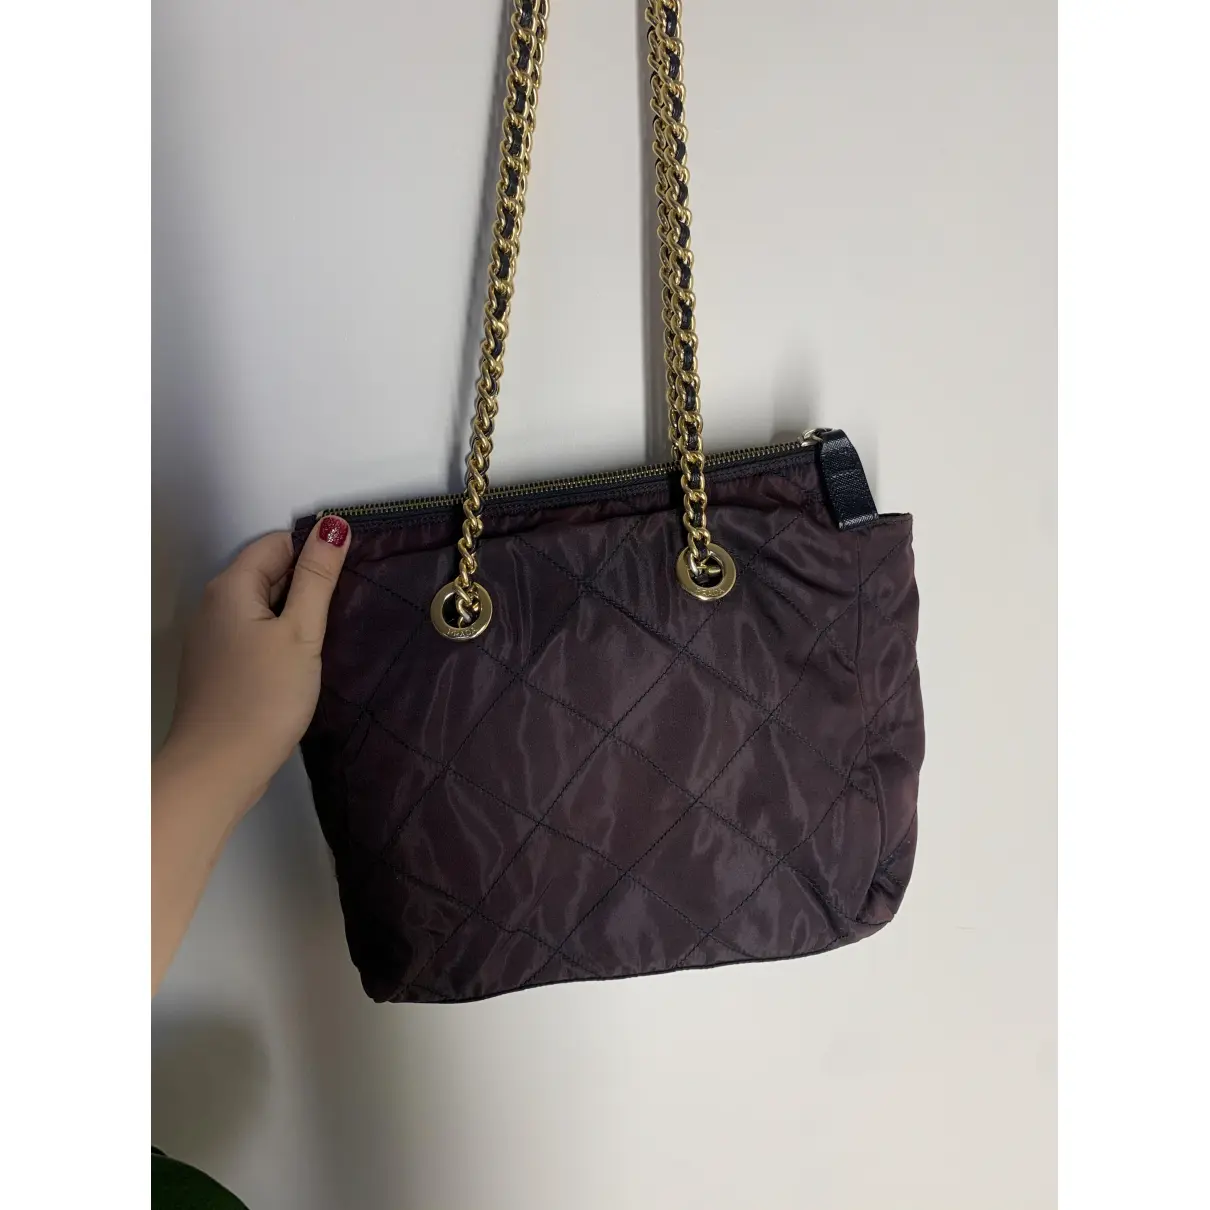 Buy Prada Tessuto bag online